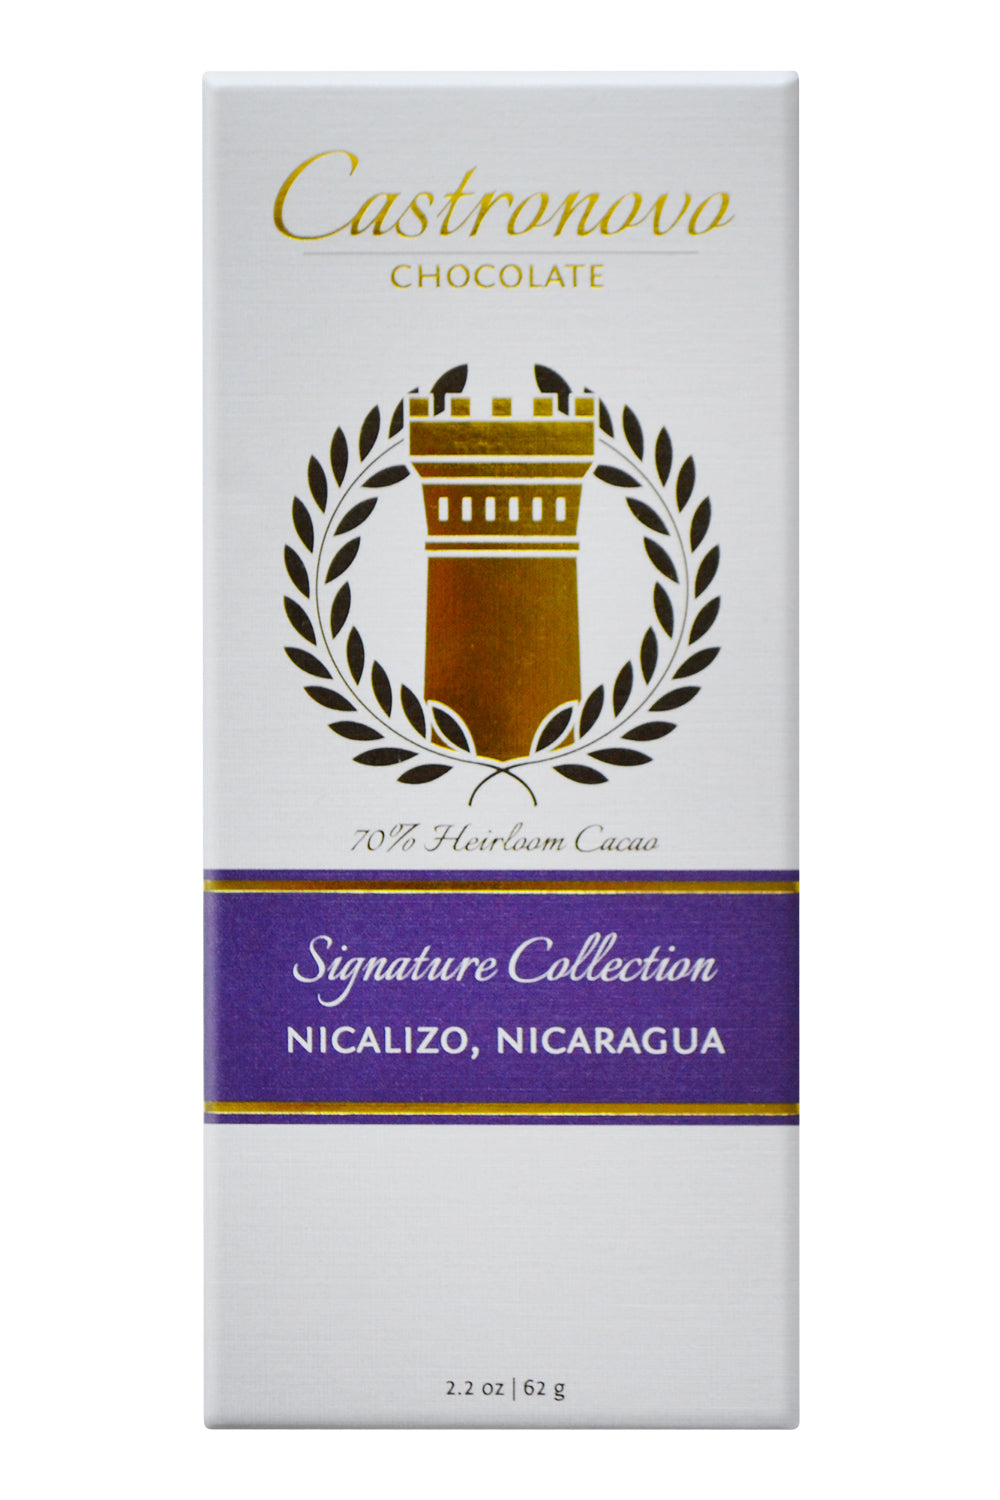 Castronovo Dark Chocolate - Nicalizo, Nicaragua - Signature Collection